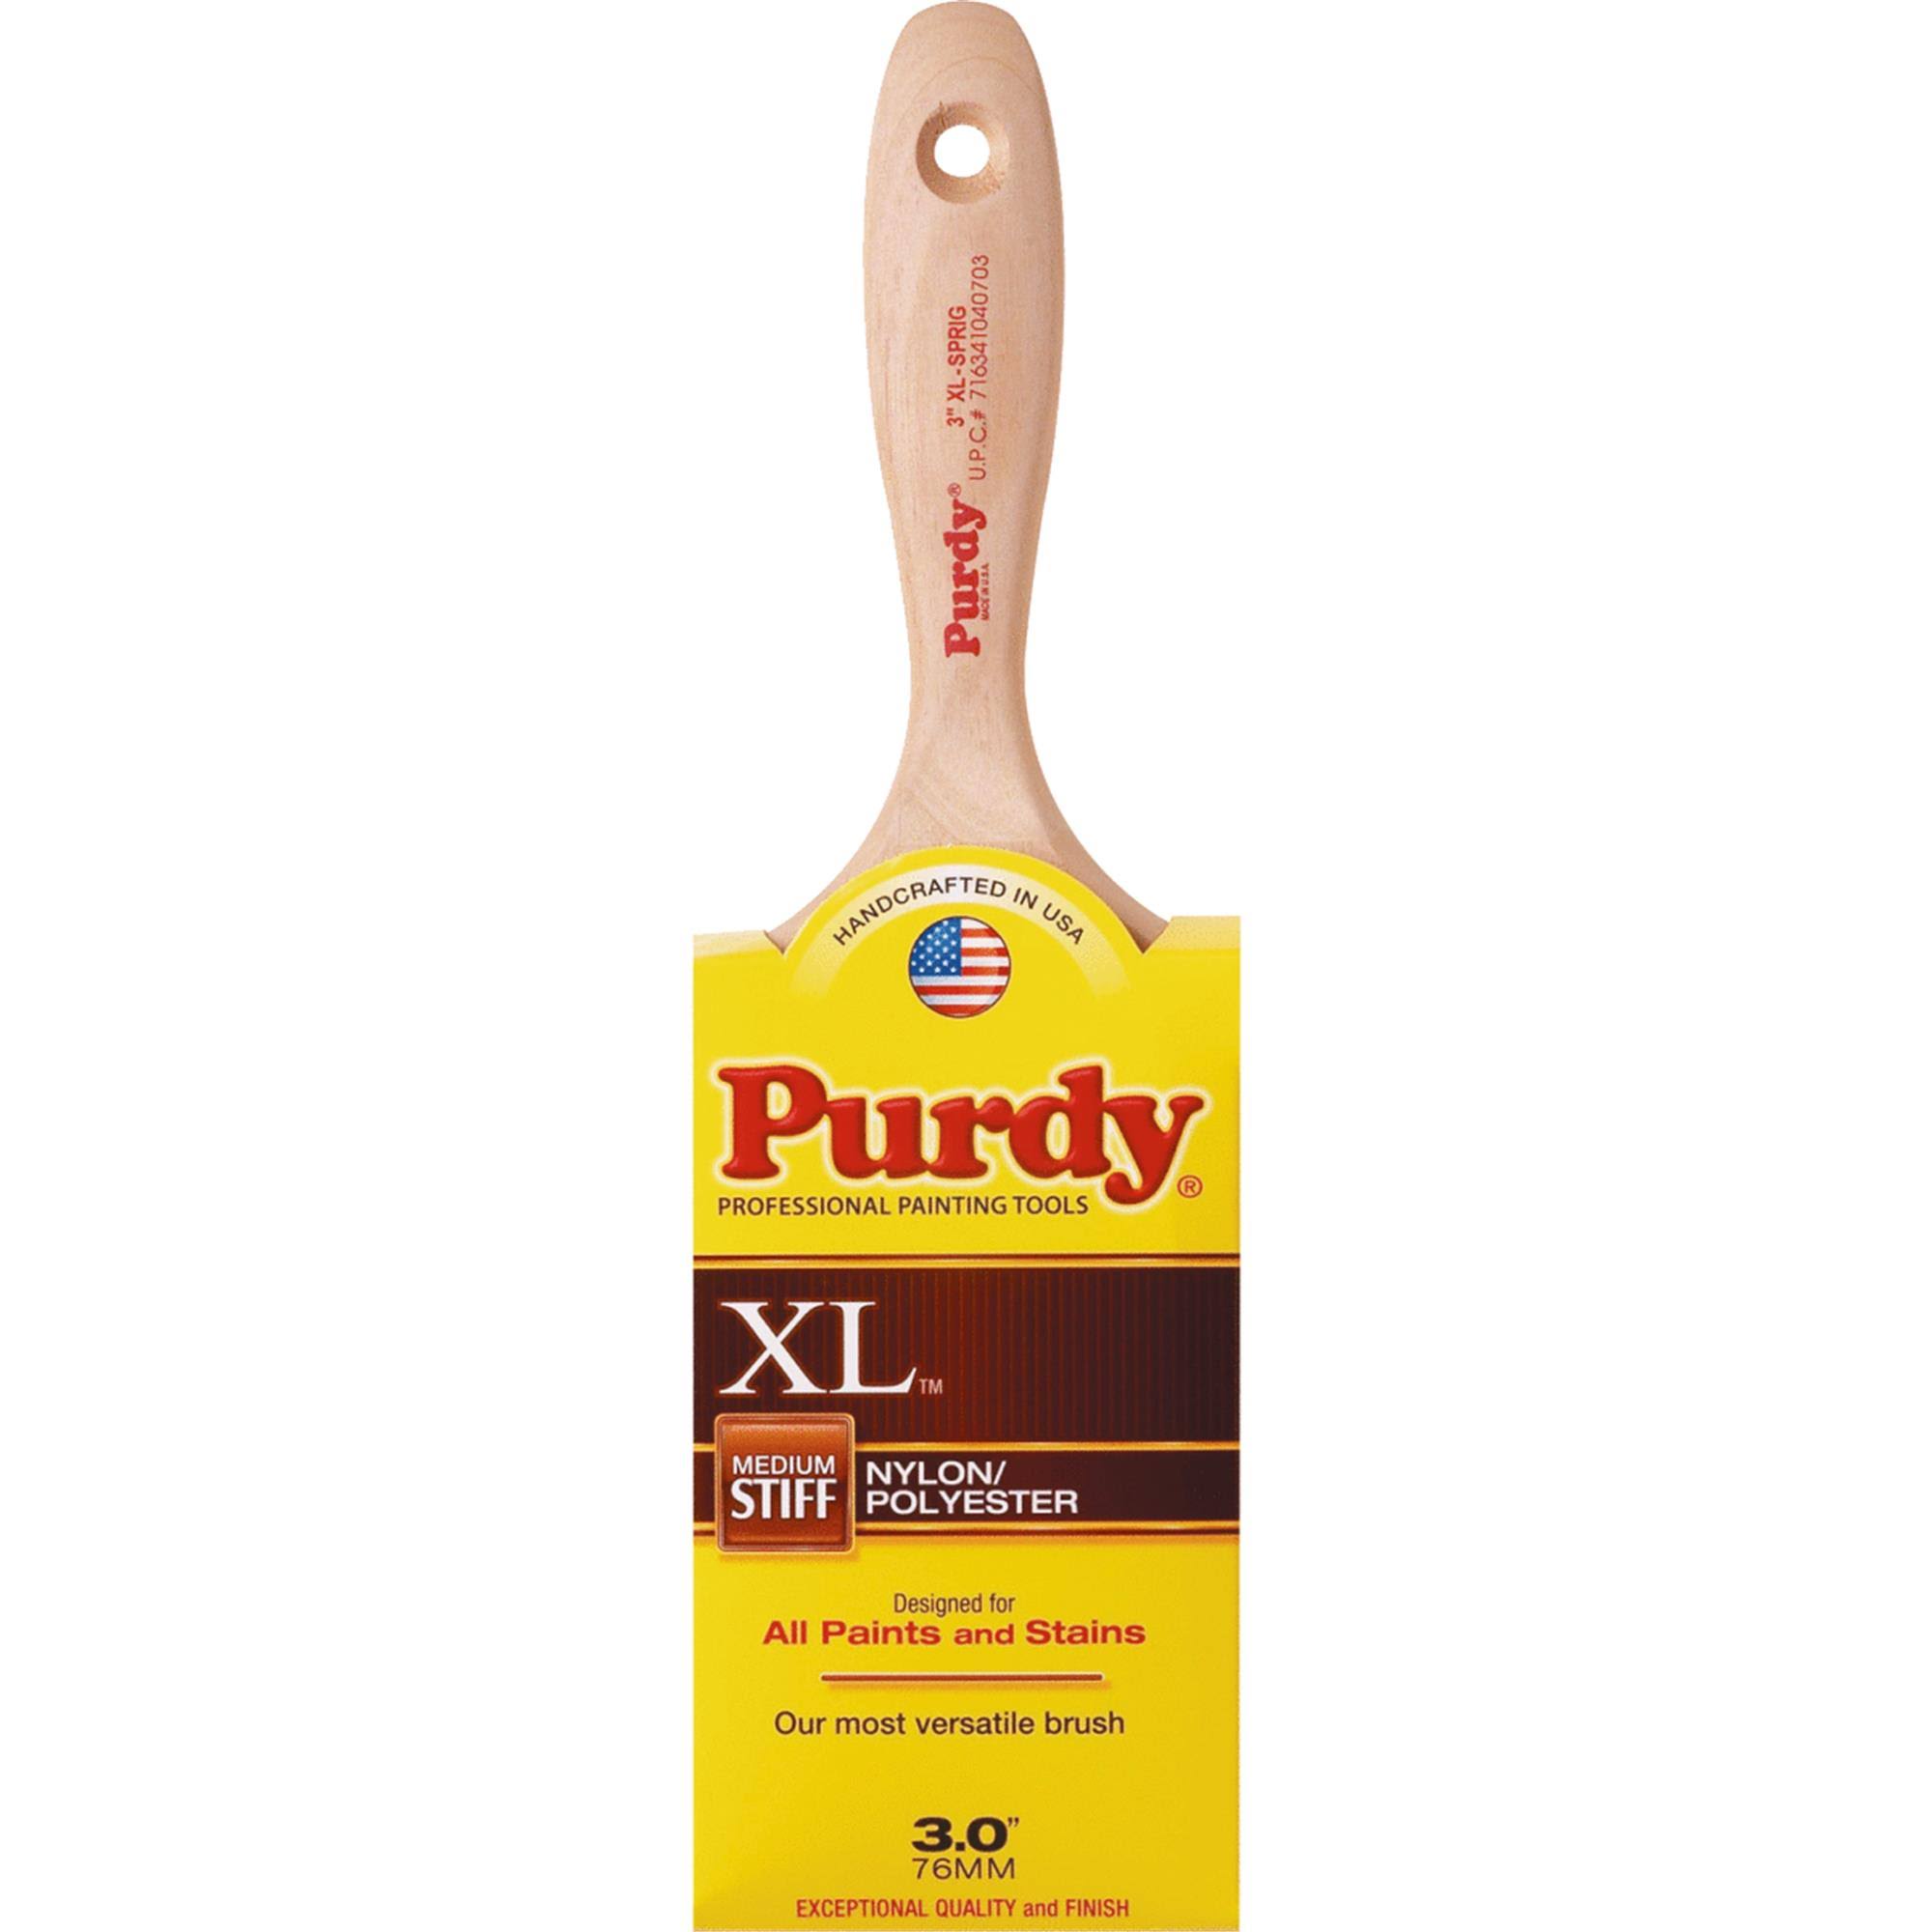 Purdy Paint Brush - Medium Stiff, X-Large